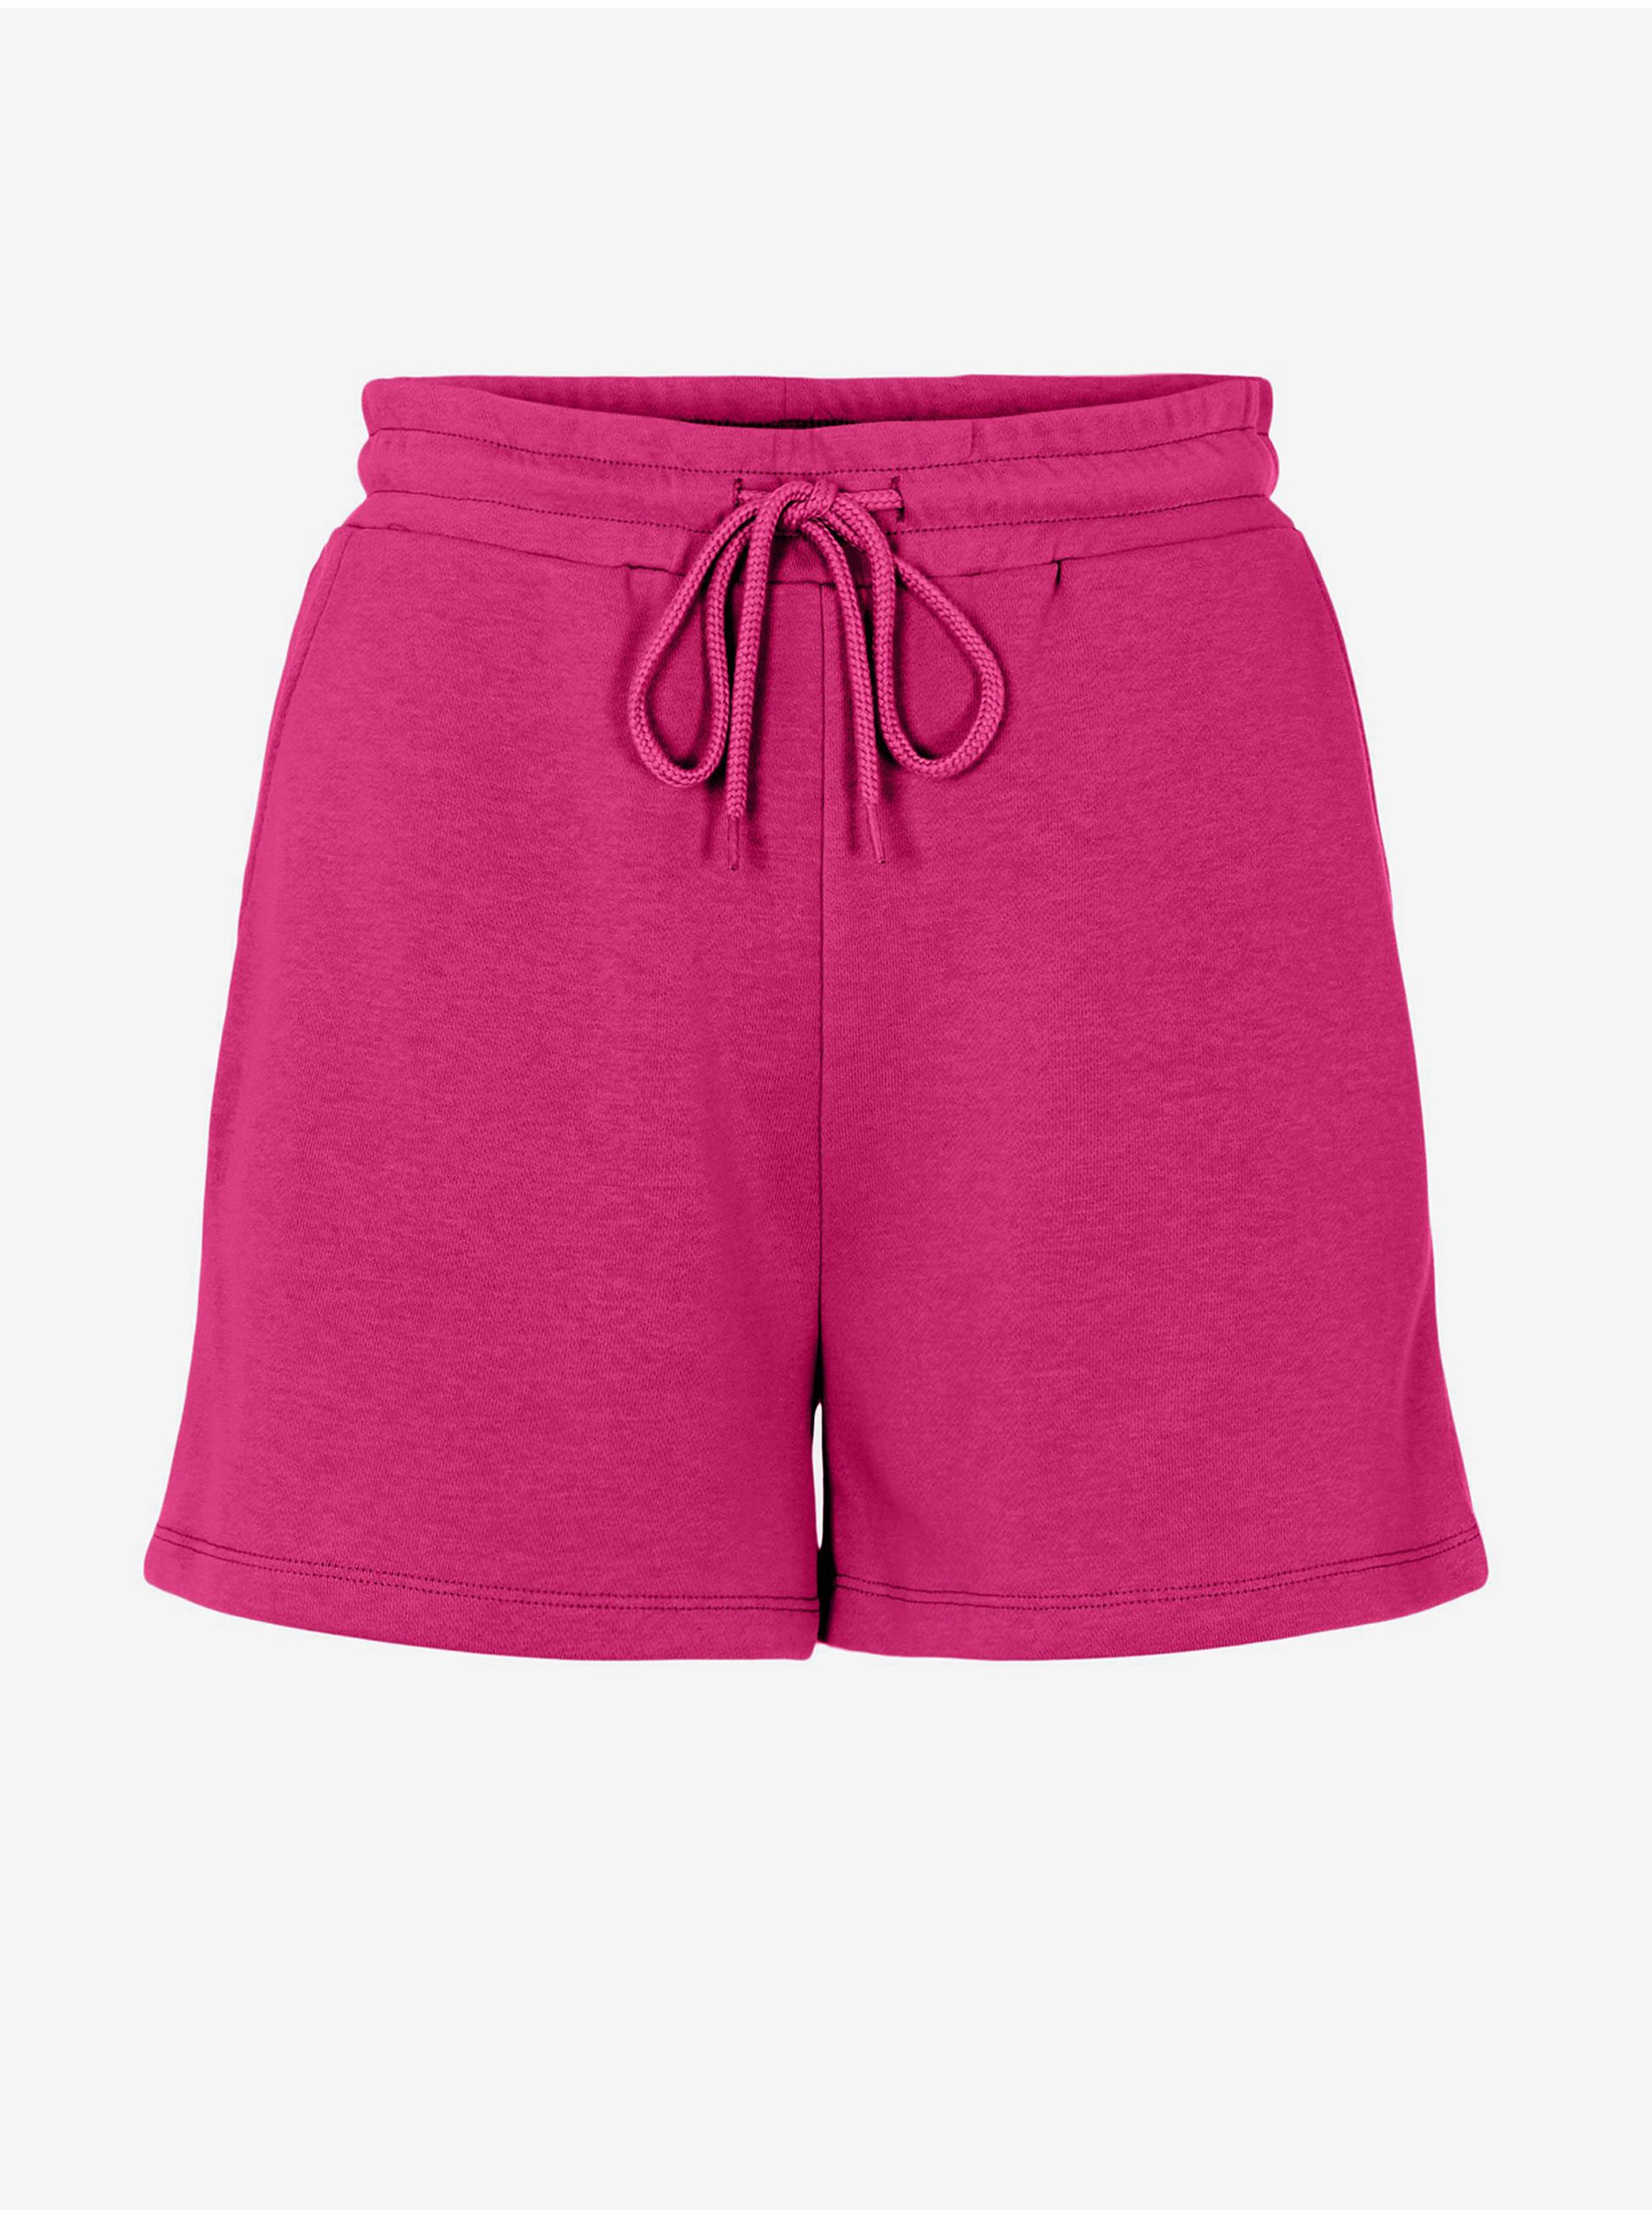 Women's Basic Sweatpants Dark Pink Pieces Chilli Shorts - Women